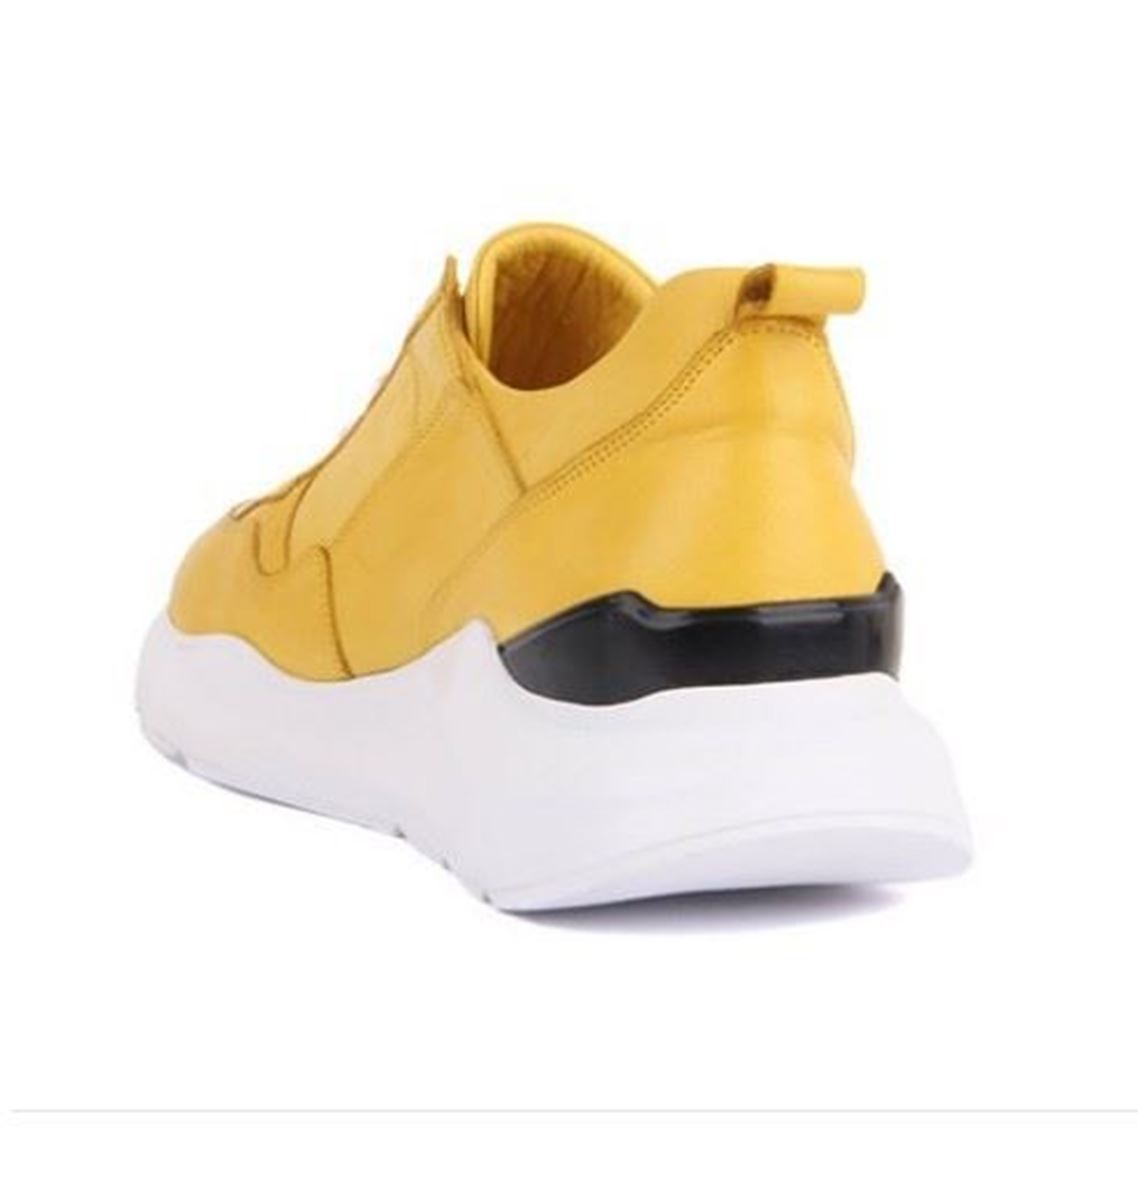 Sail Lakers - Hakiki Deri Sarı Yüksek Taban Erkek Sneaker resmi